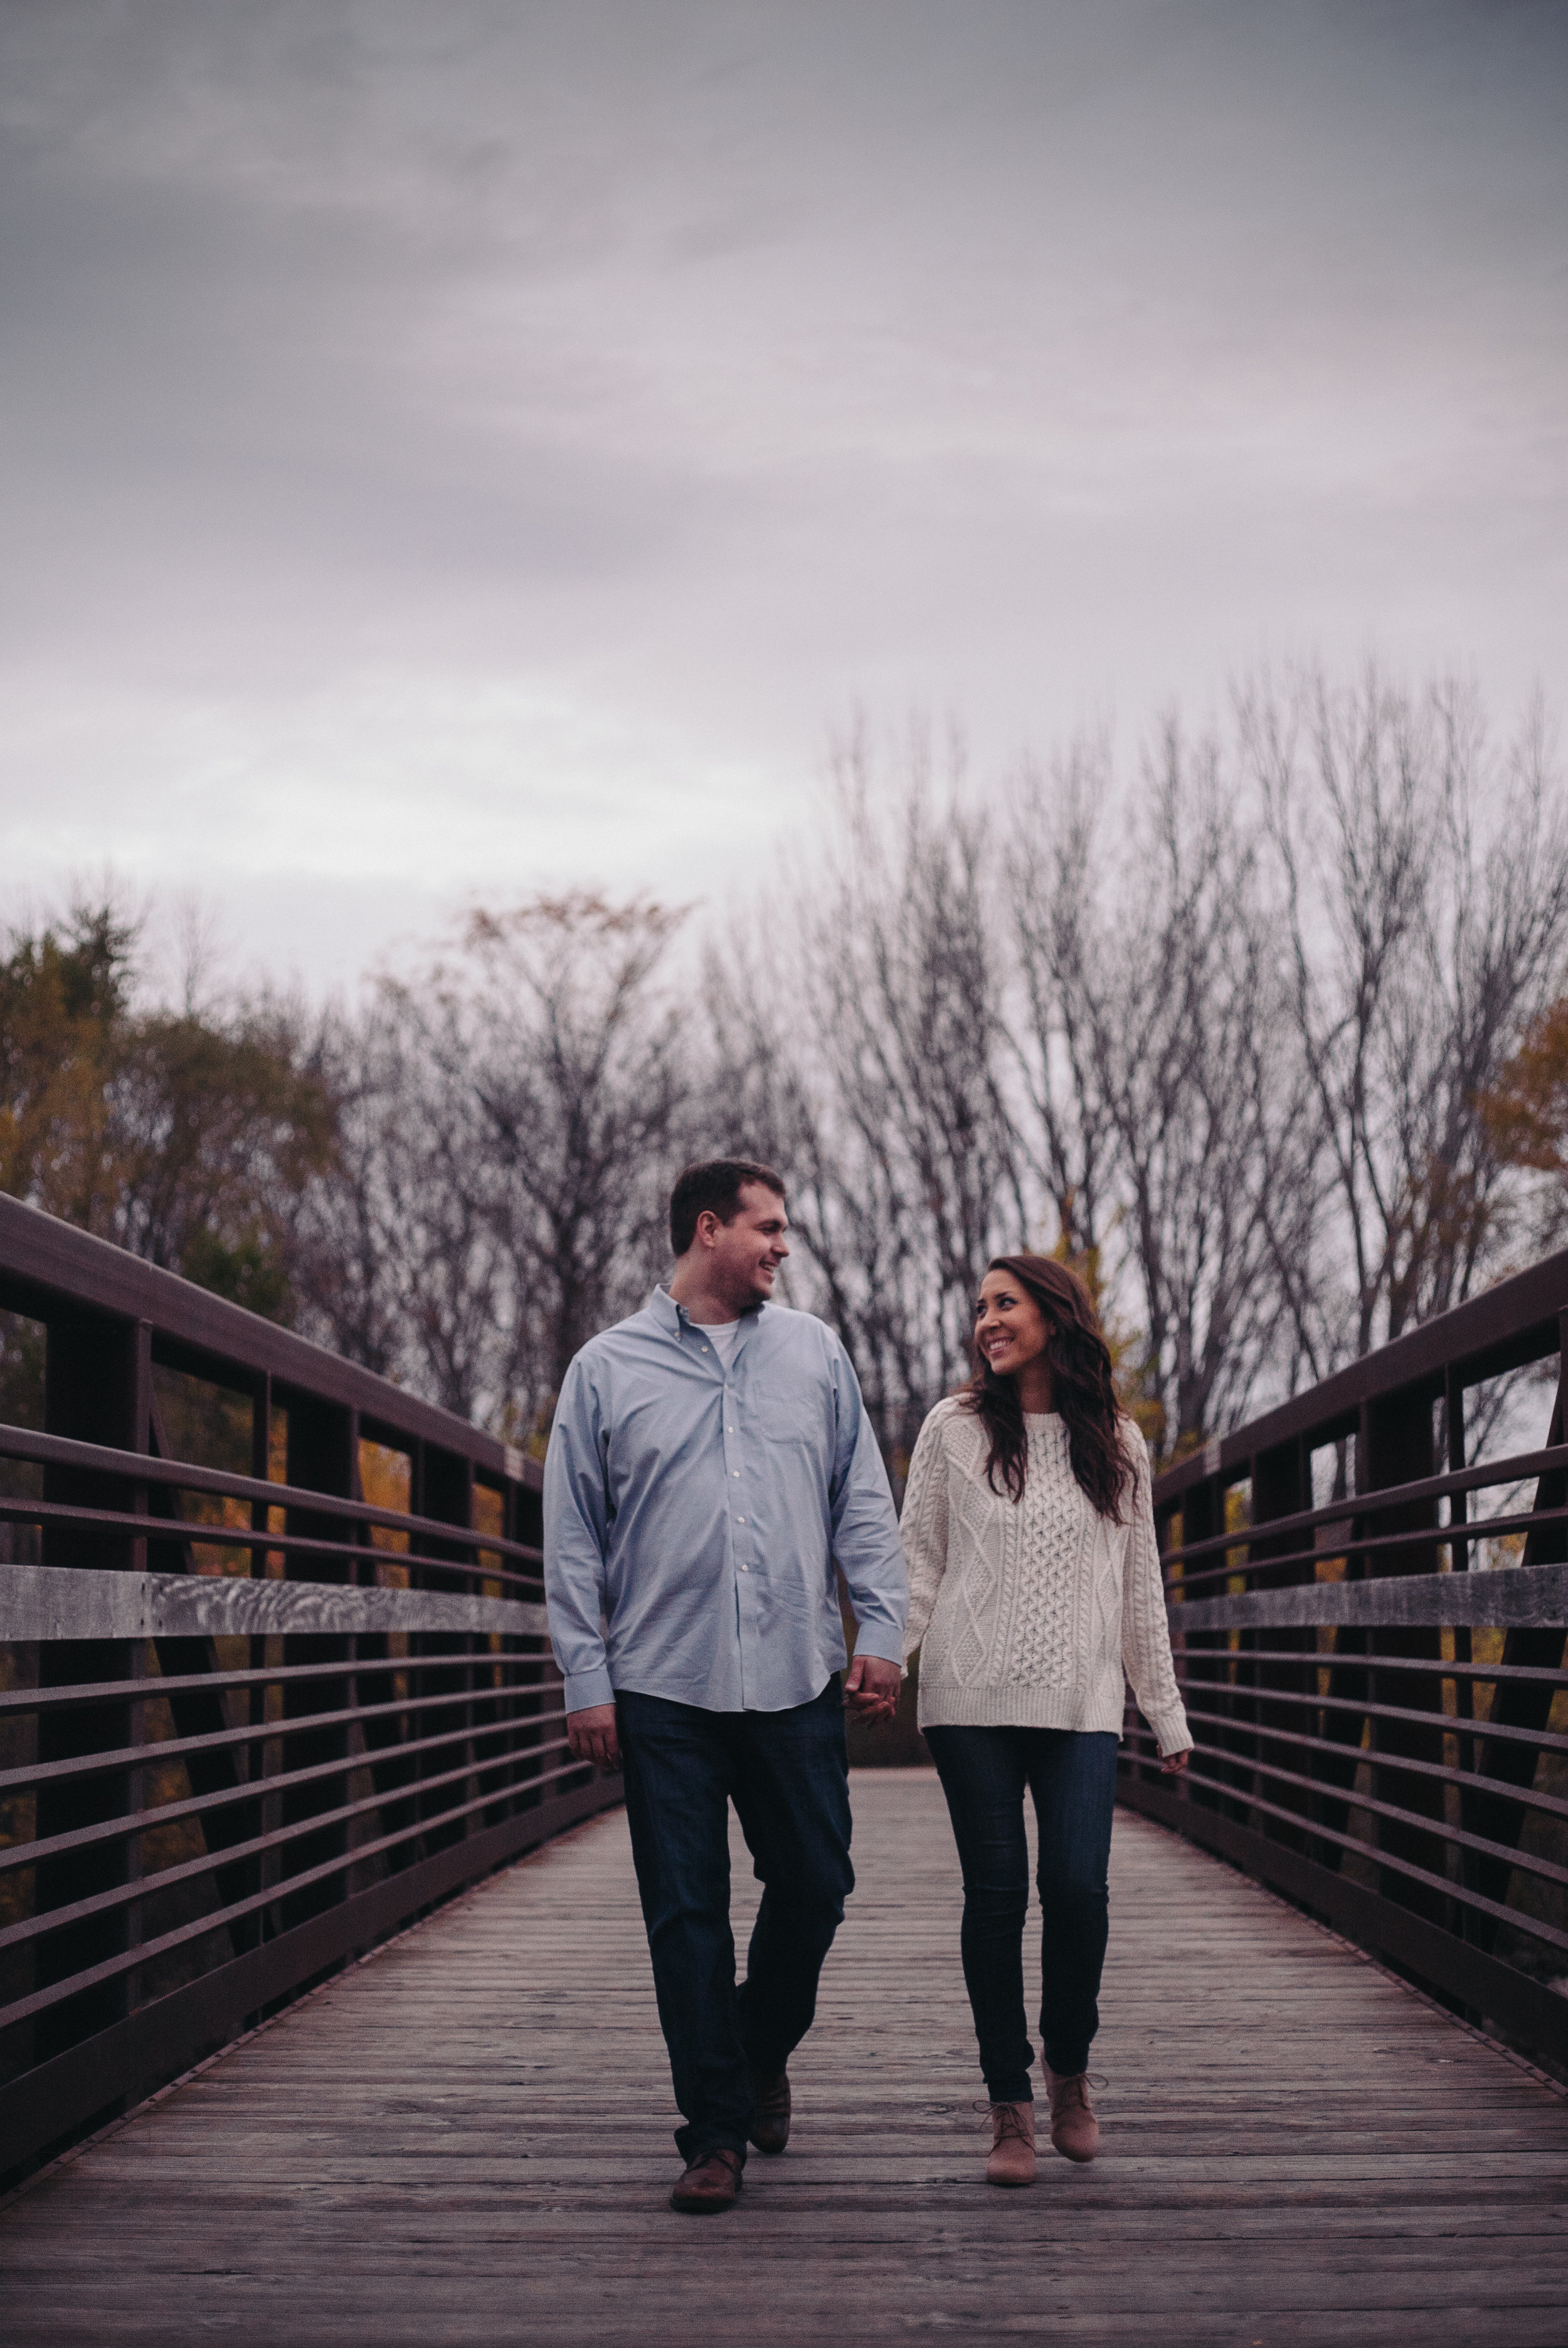  Johnsons Creative | Patrick + Lynn, Engagement Photos, Photography, Cedar Falls, Iowa, Midwest 